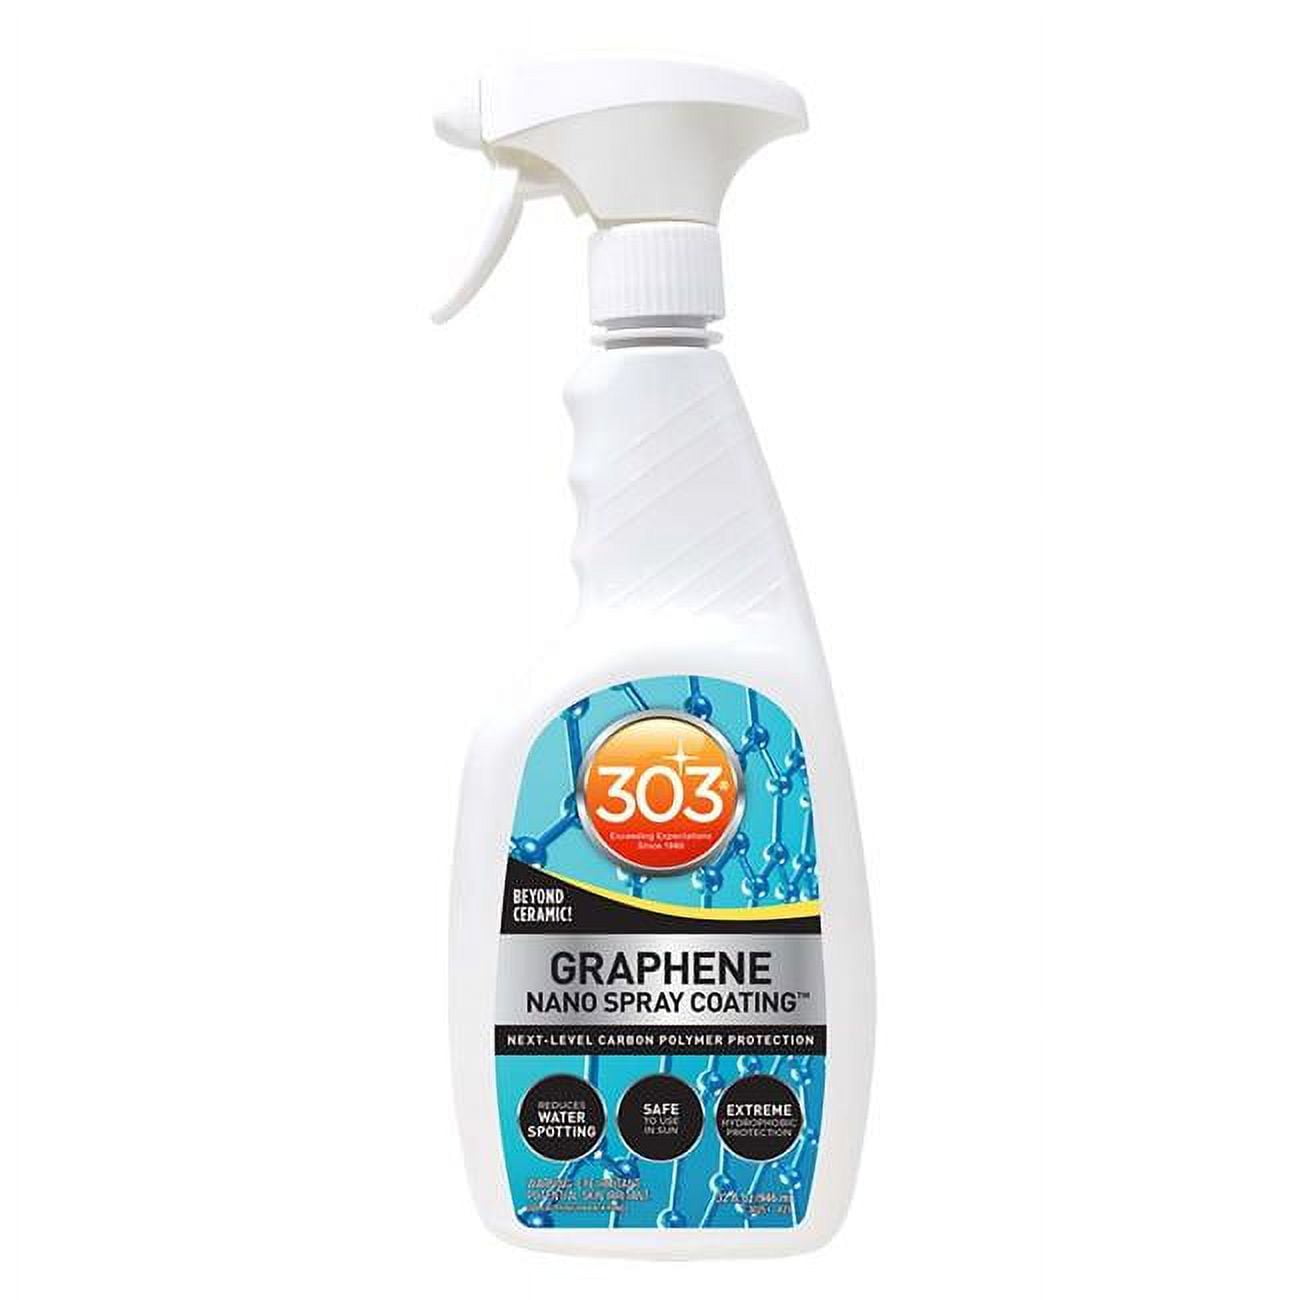 303 30251 32 oz Marine Graphene Nano Spray Coating for Fishing